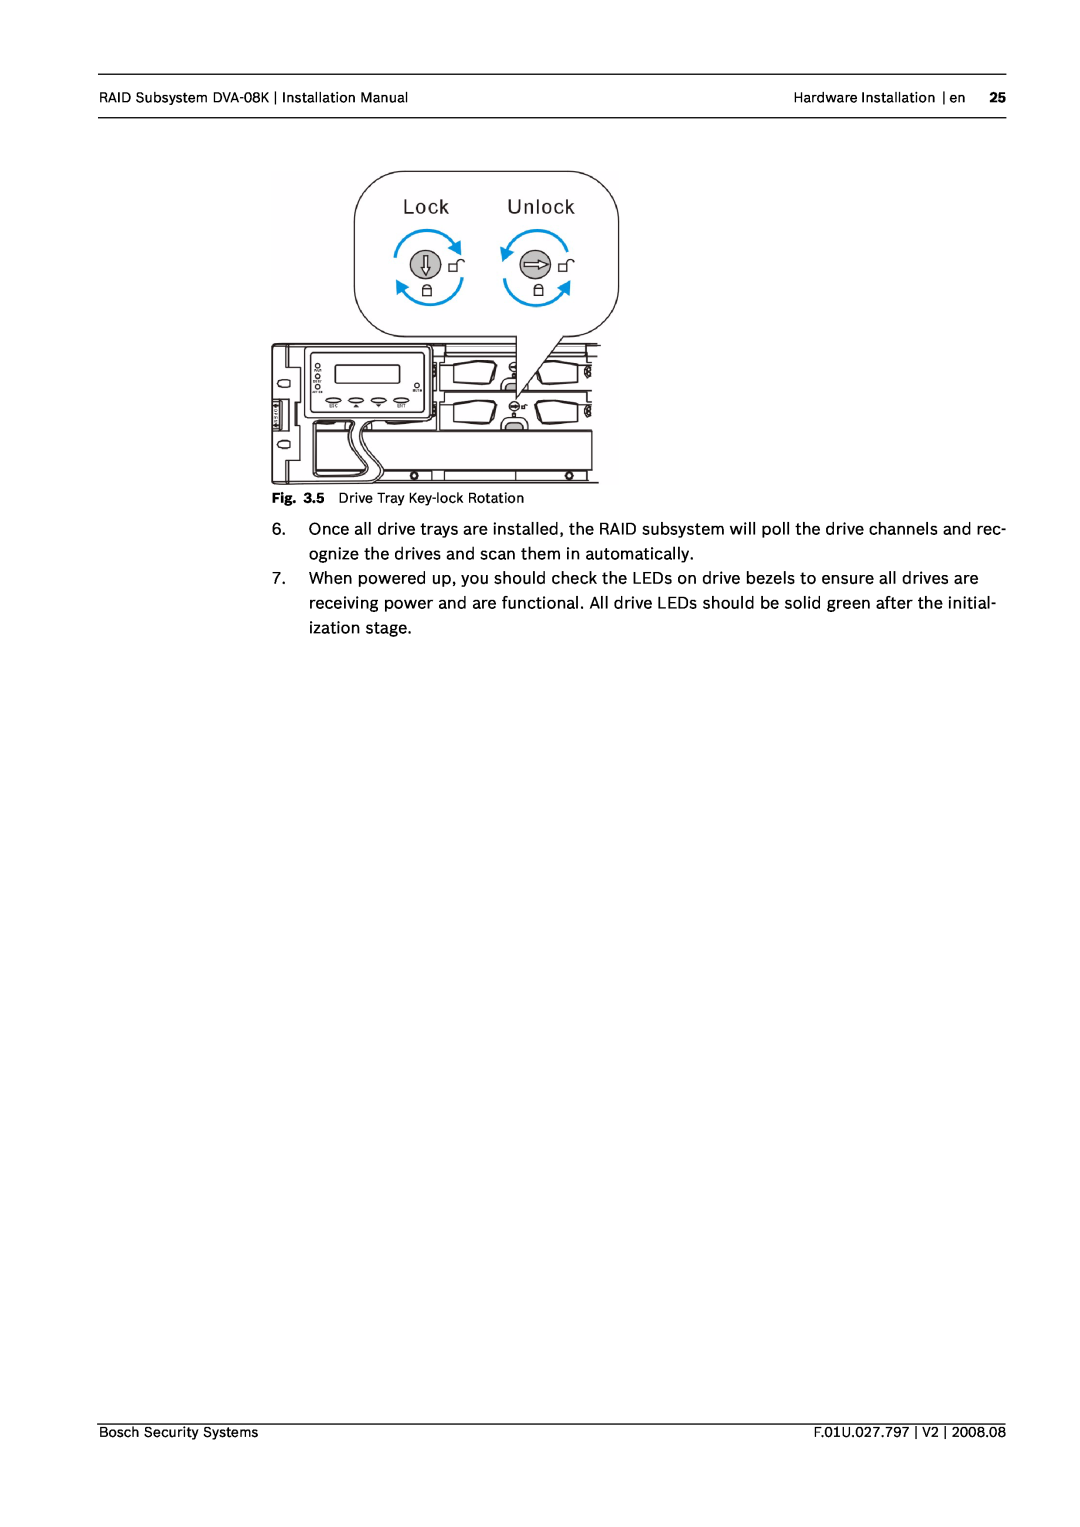 Bosch Appliances DVA-08K manual 